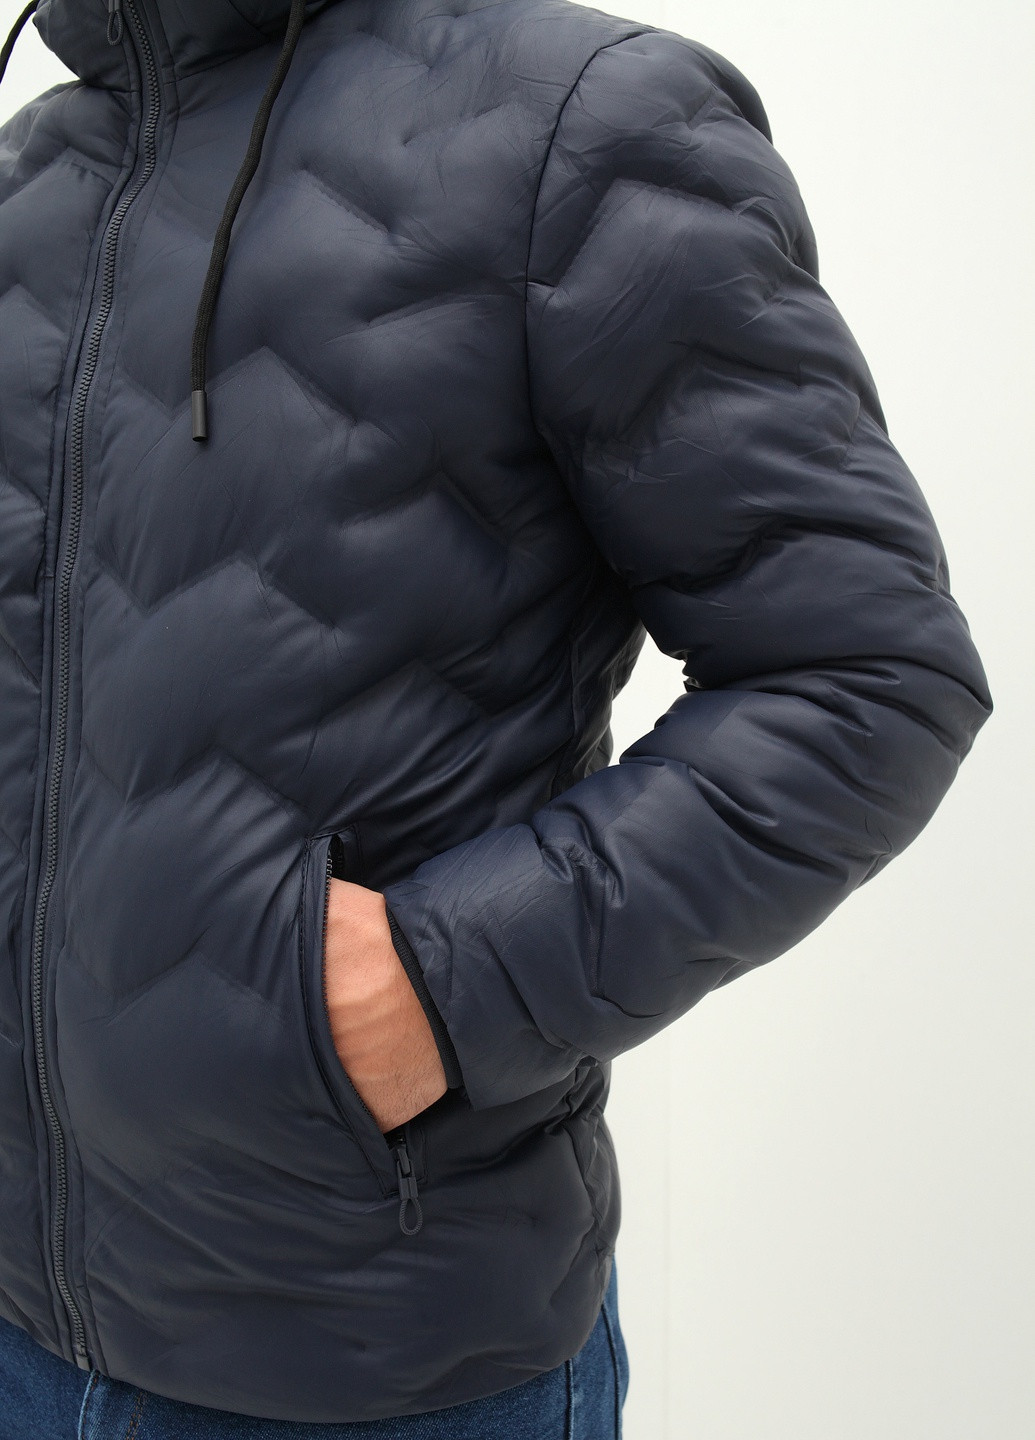 Темно-синяя зимняя куртка No Brand